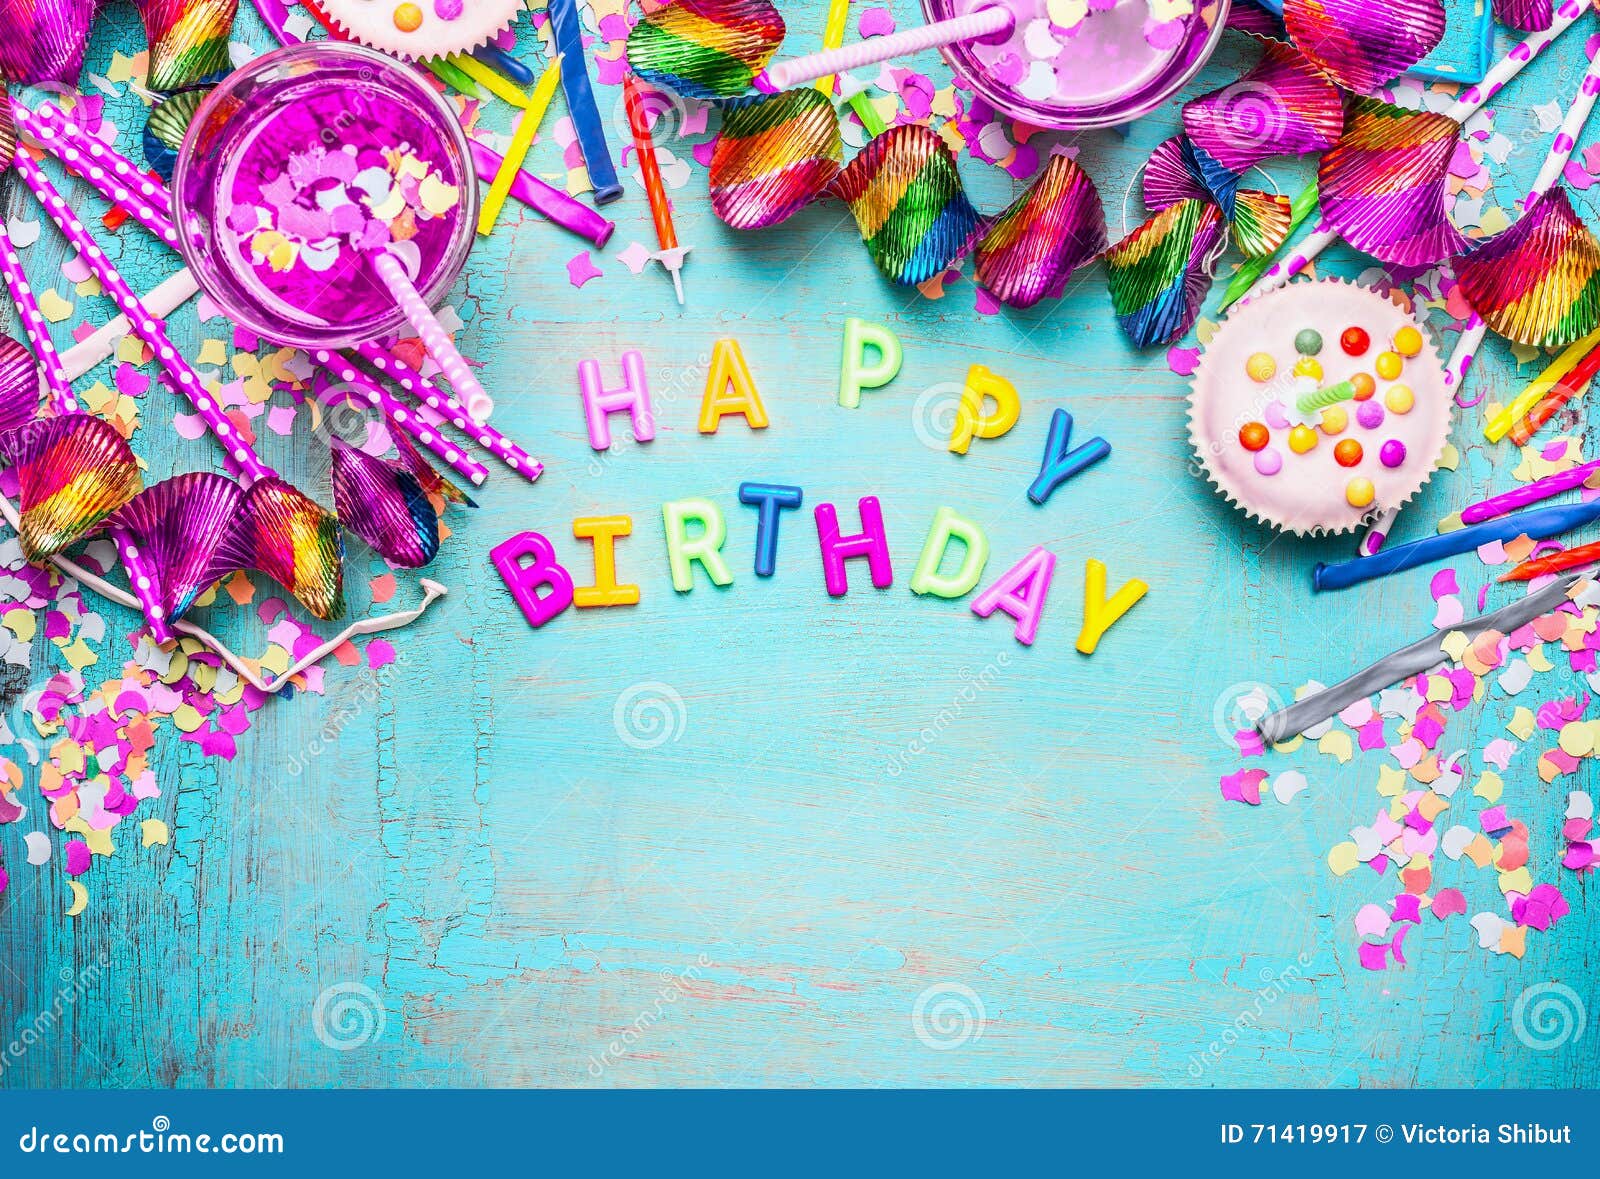 5299291 Birthday Background Images Stock Photos  Vectors  Shutterstock